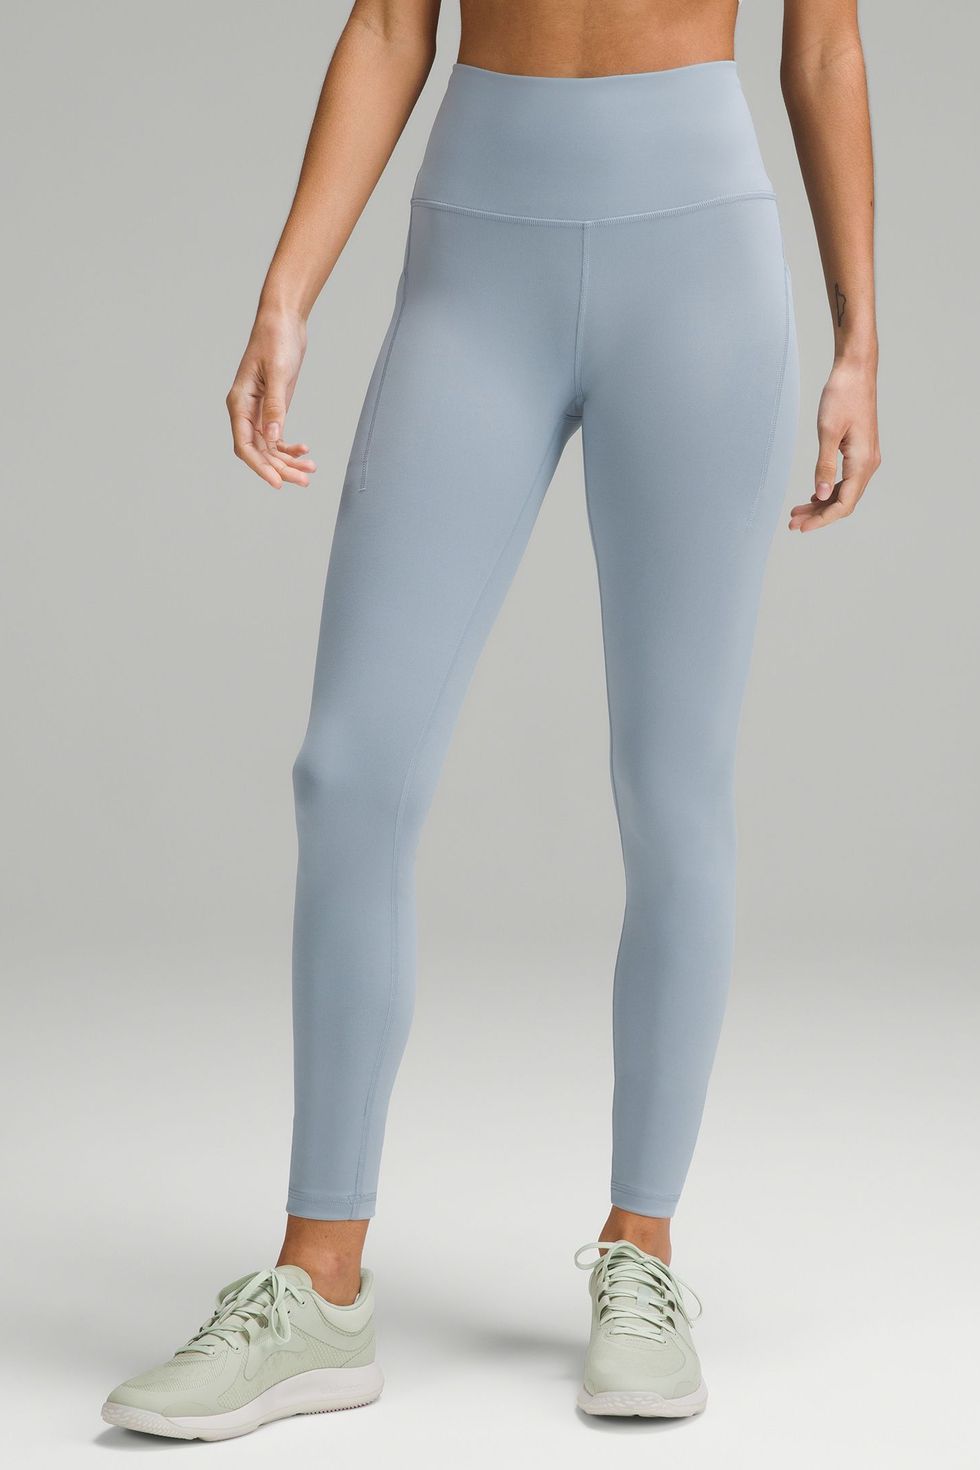 Lululemon leggings with pockets, size 6, navy blue